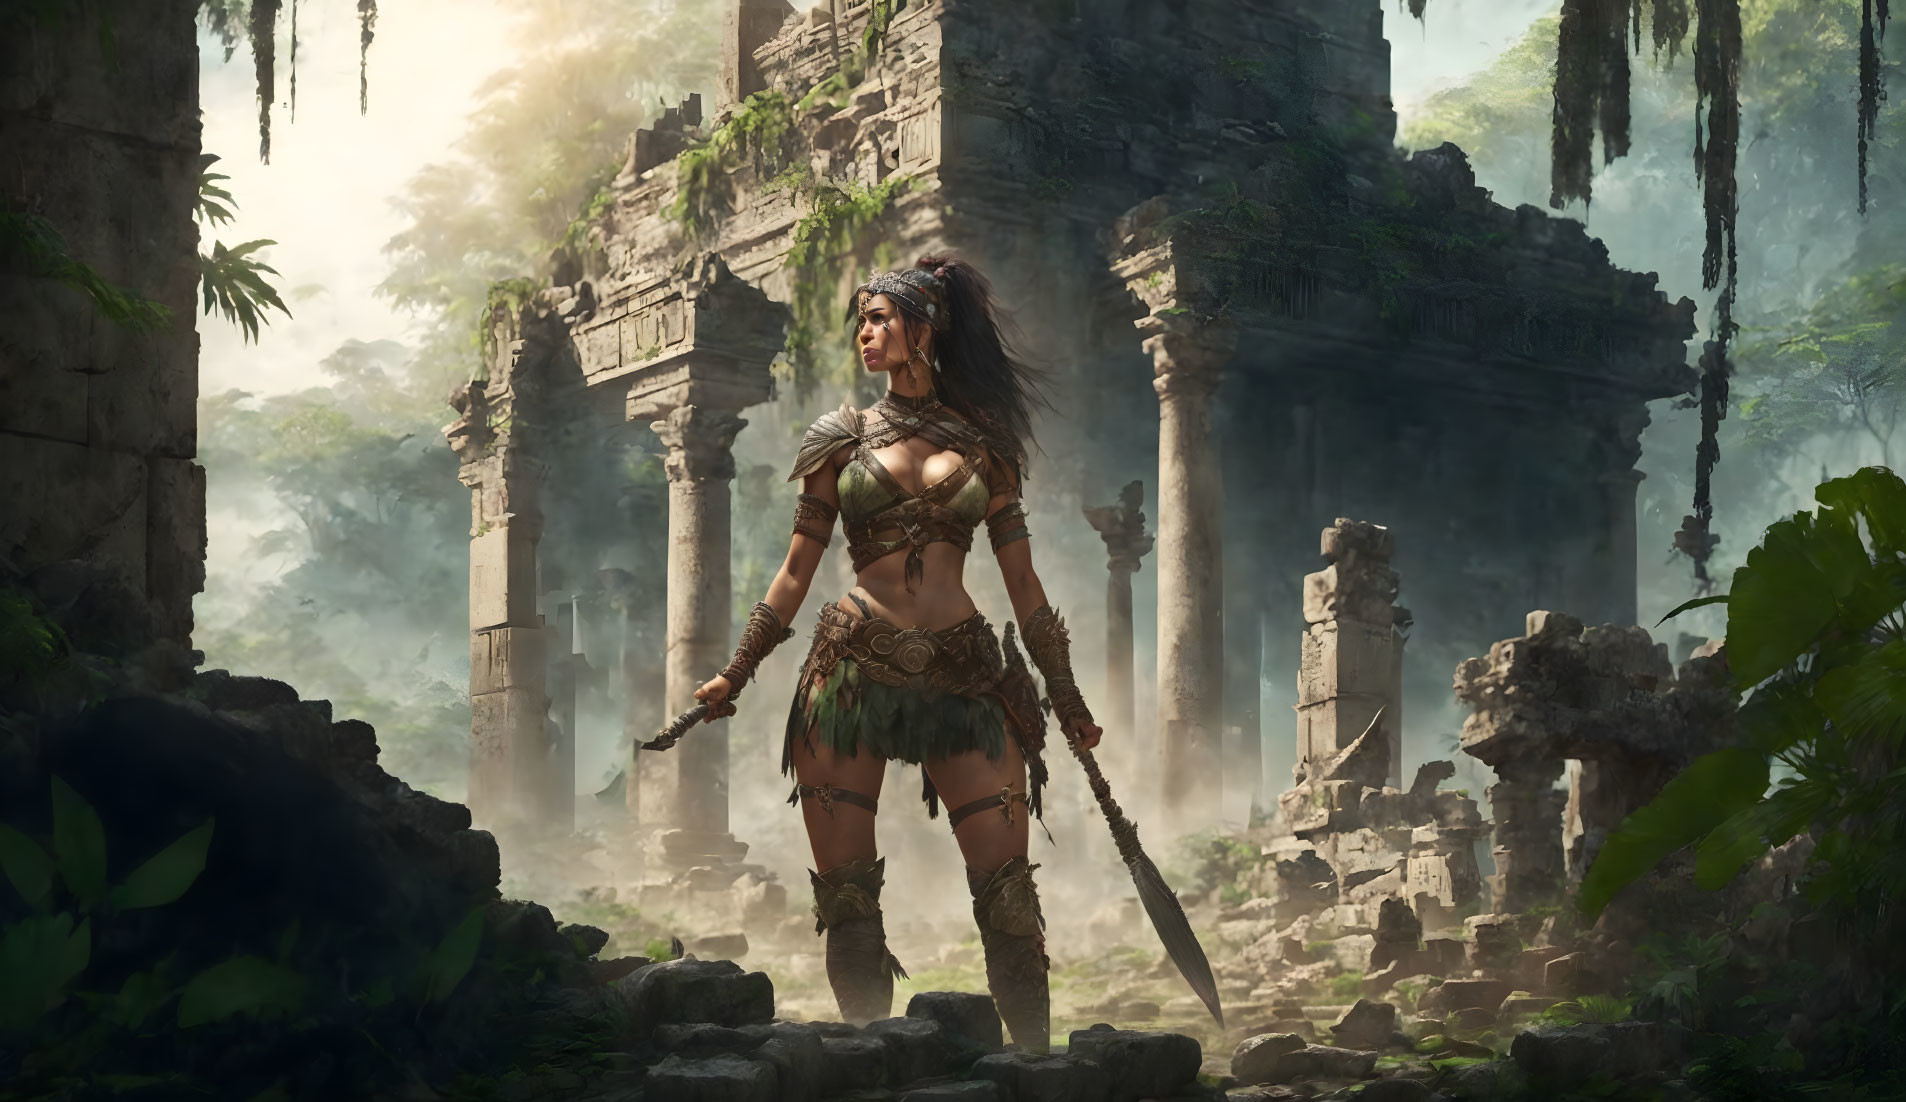 Warrior woman exploring ruins